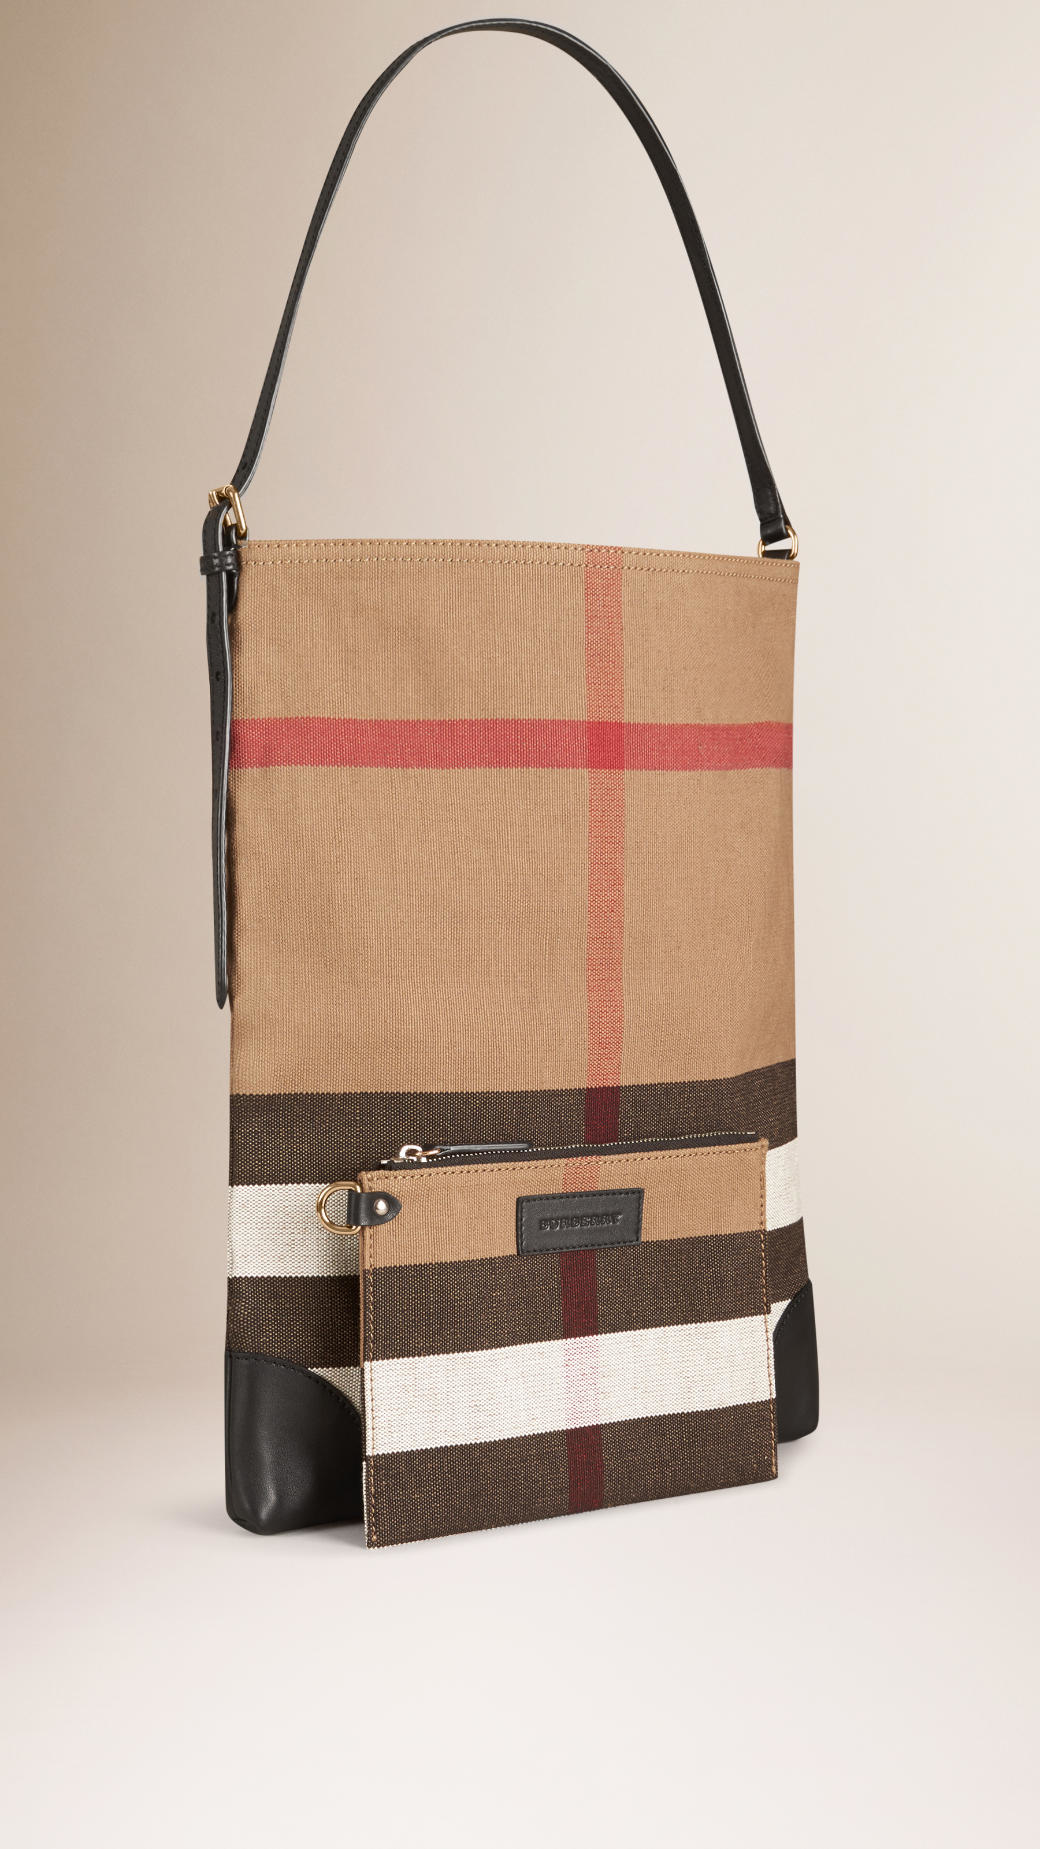 Lyst - Burberry Canvas Check Shoulder Bag in Black